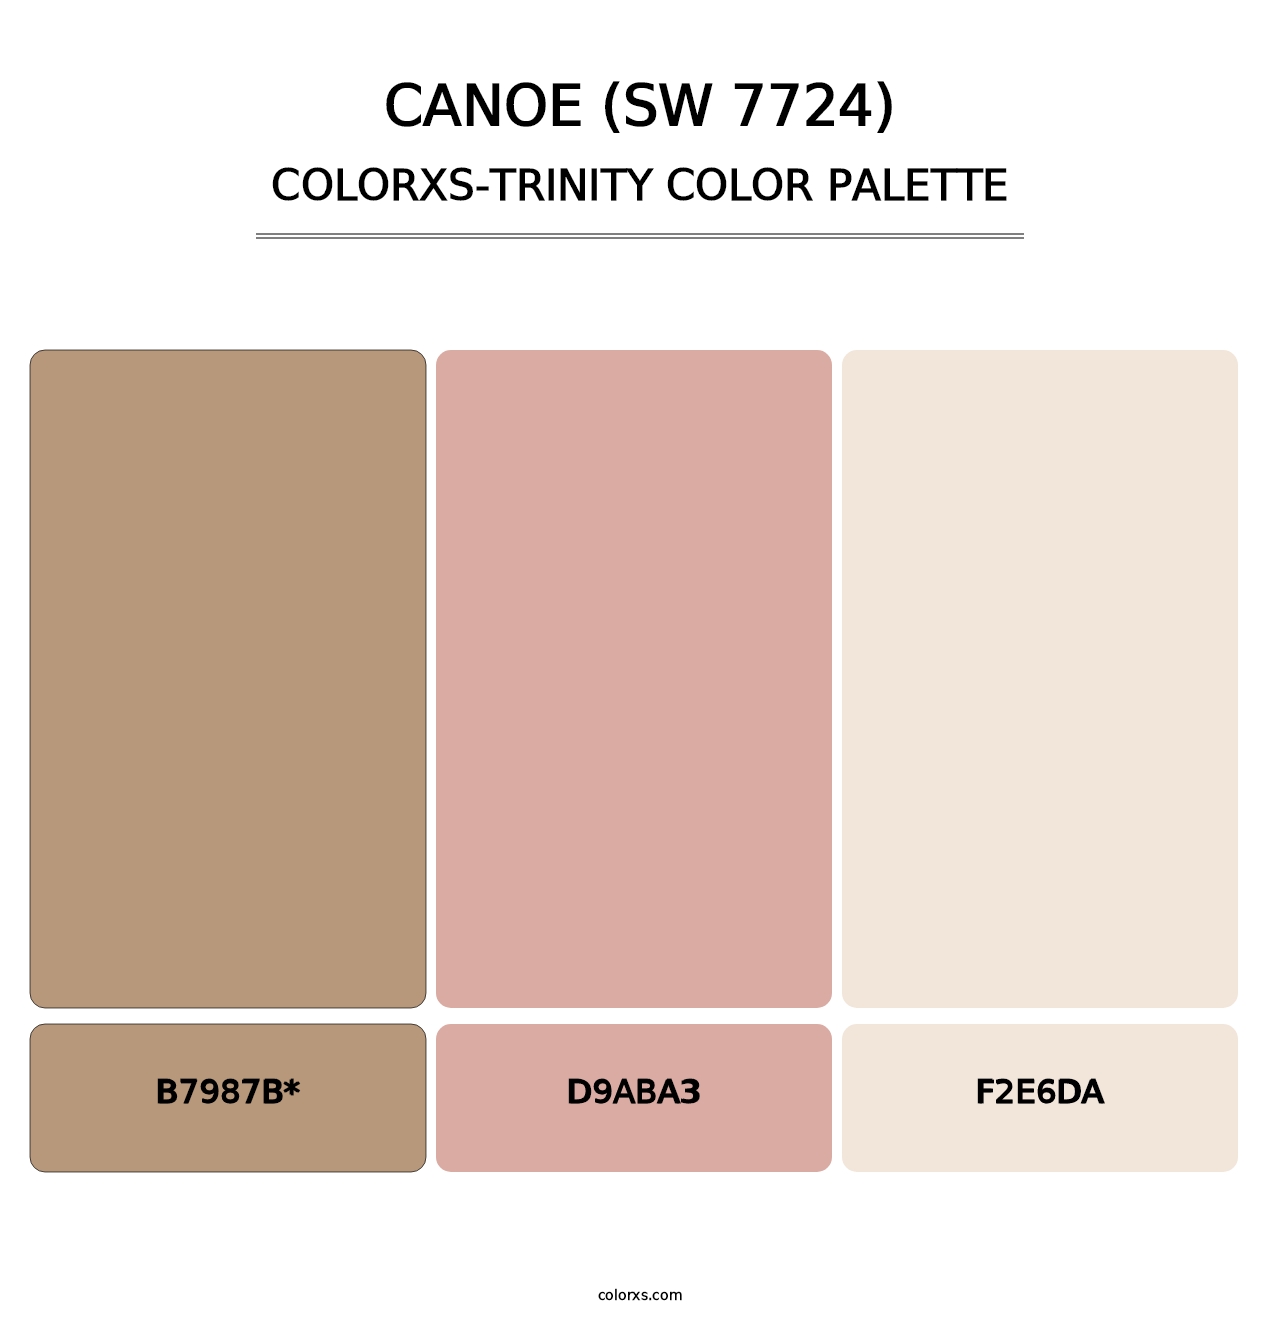 Canoe (SW 7724) - Colorxs Trinity Palette